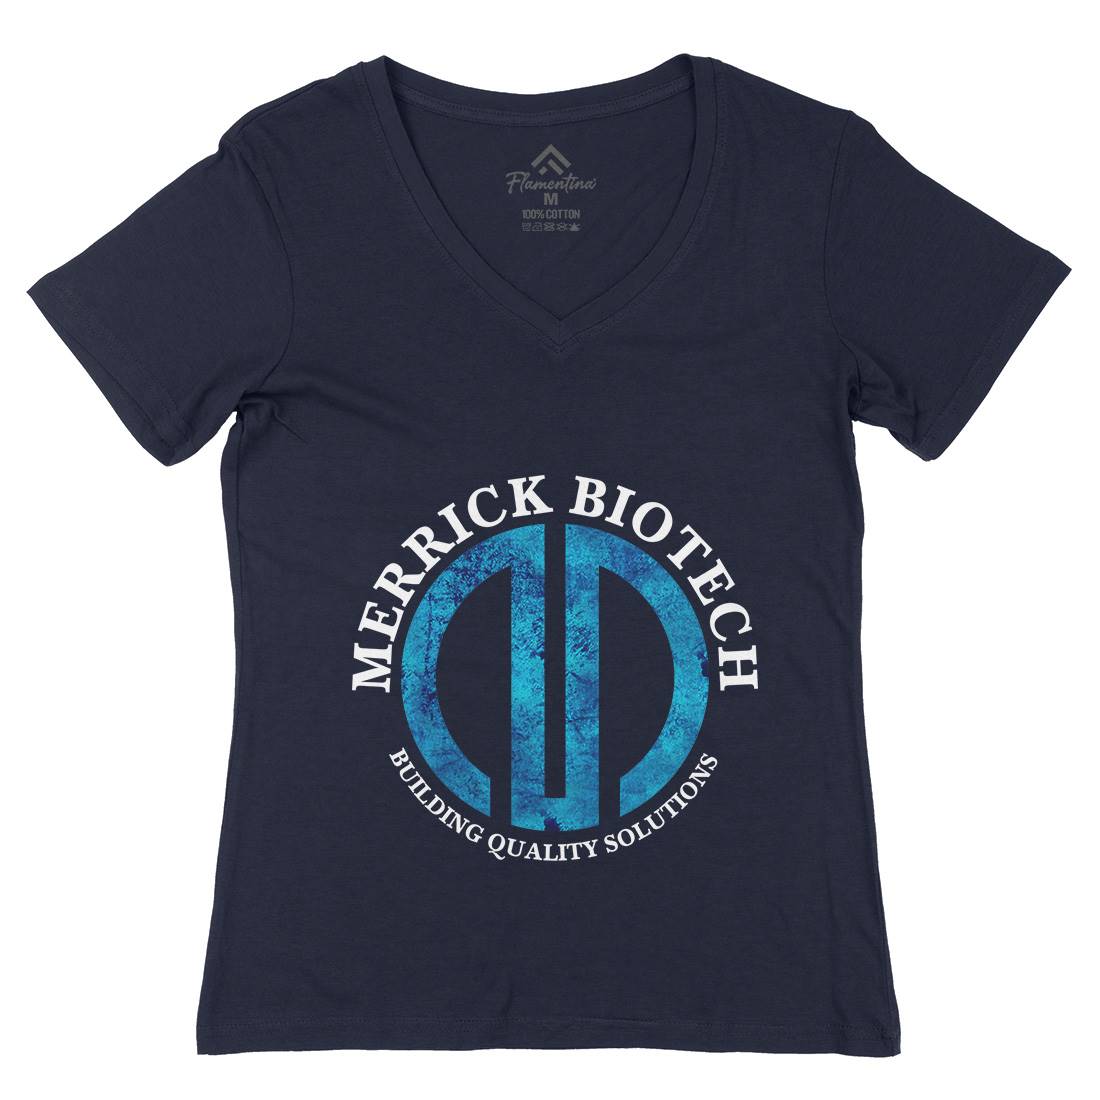 Merrick Biotech Womens Organic V-Neck T-Shirt Space D393